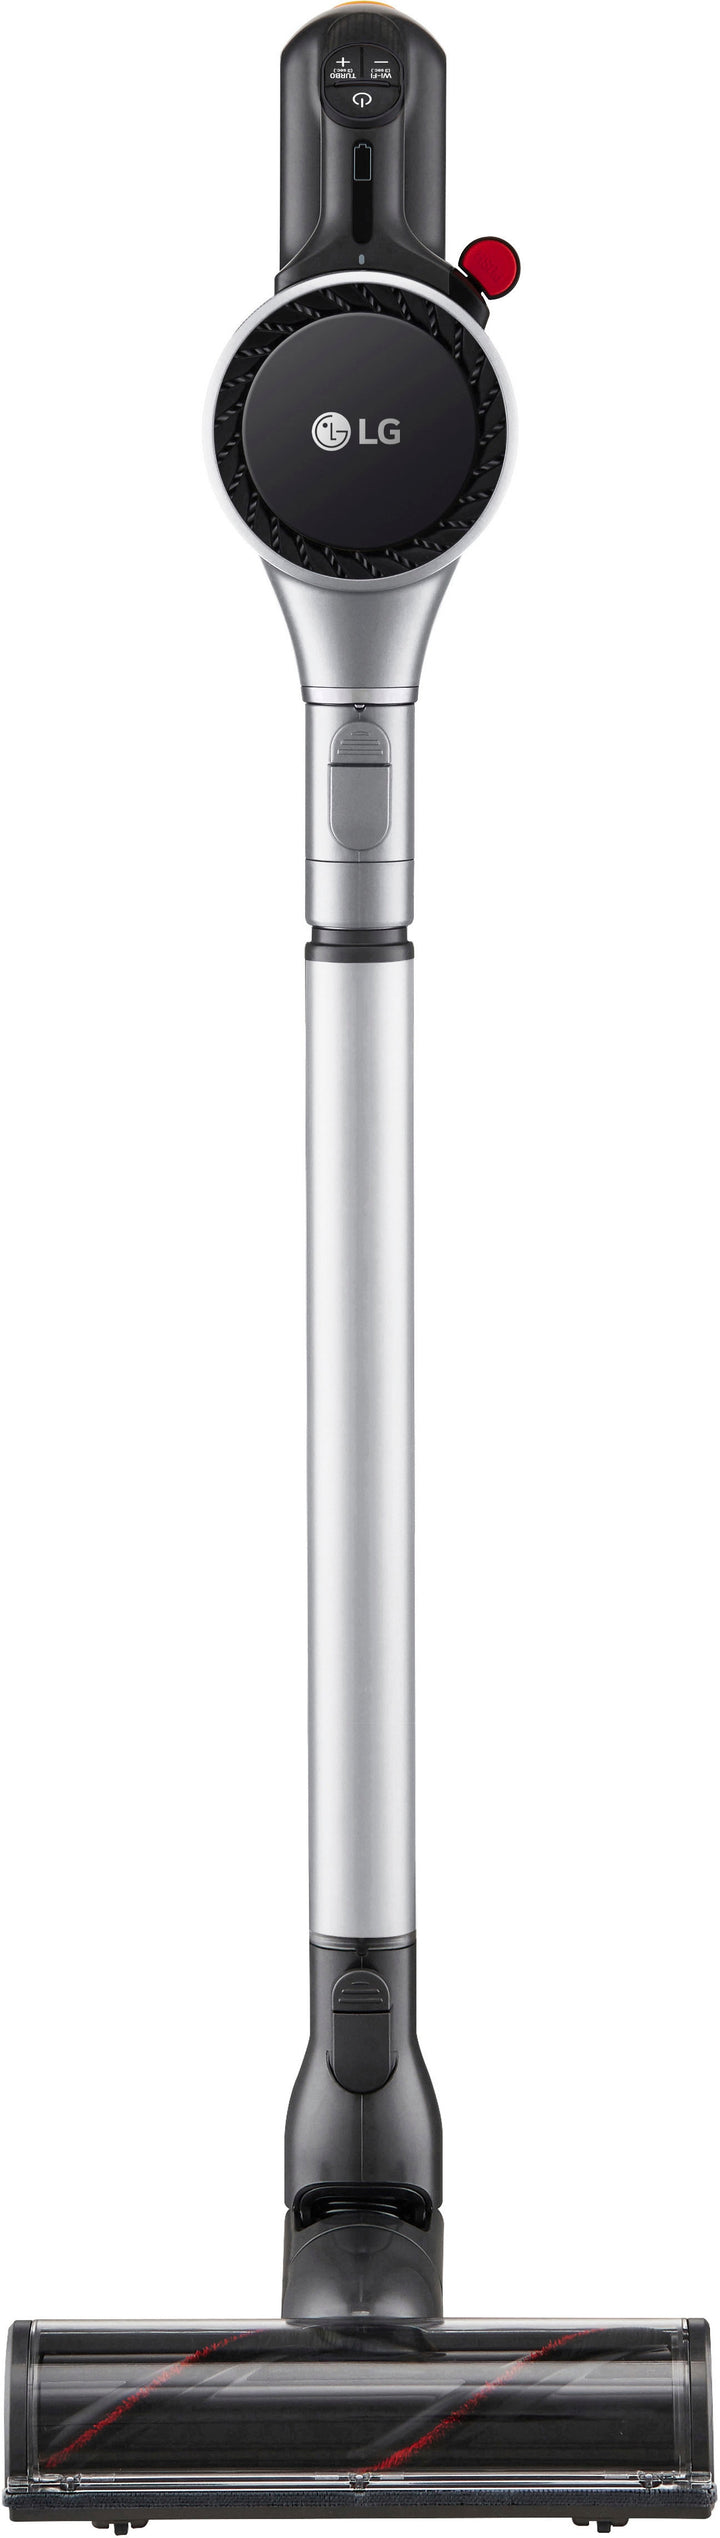 LG - CordZero Cordless Stick Vacuum with Kompressor technology - Matte Silver_19